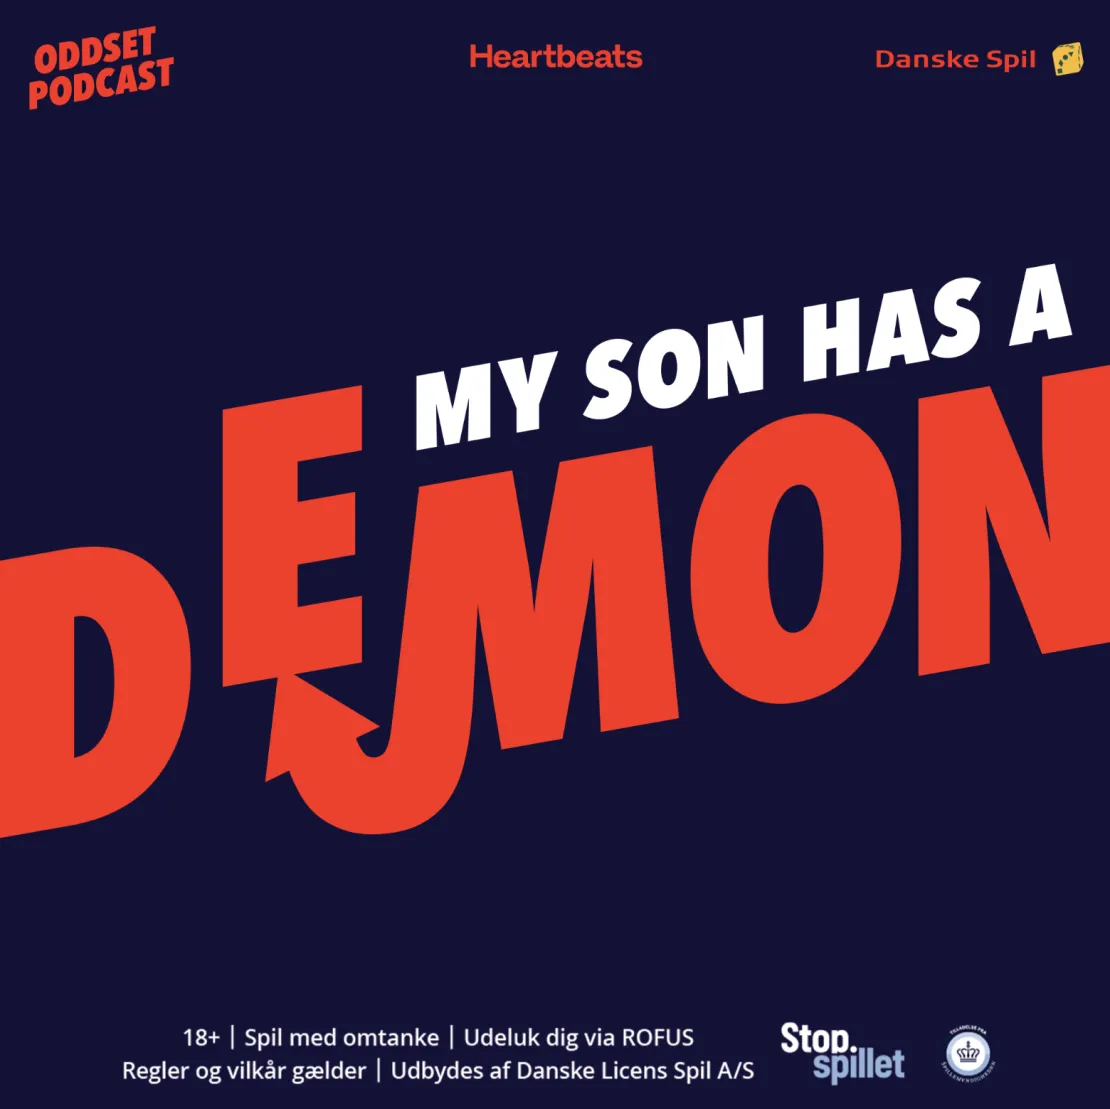 Campaign - My Son Has a Demon